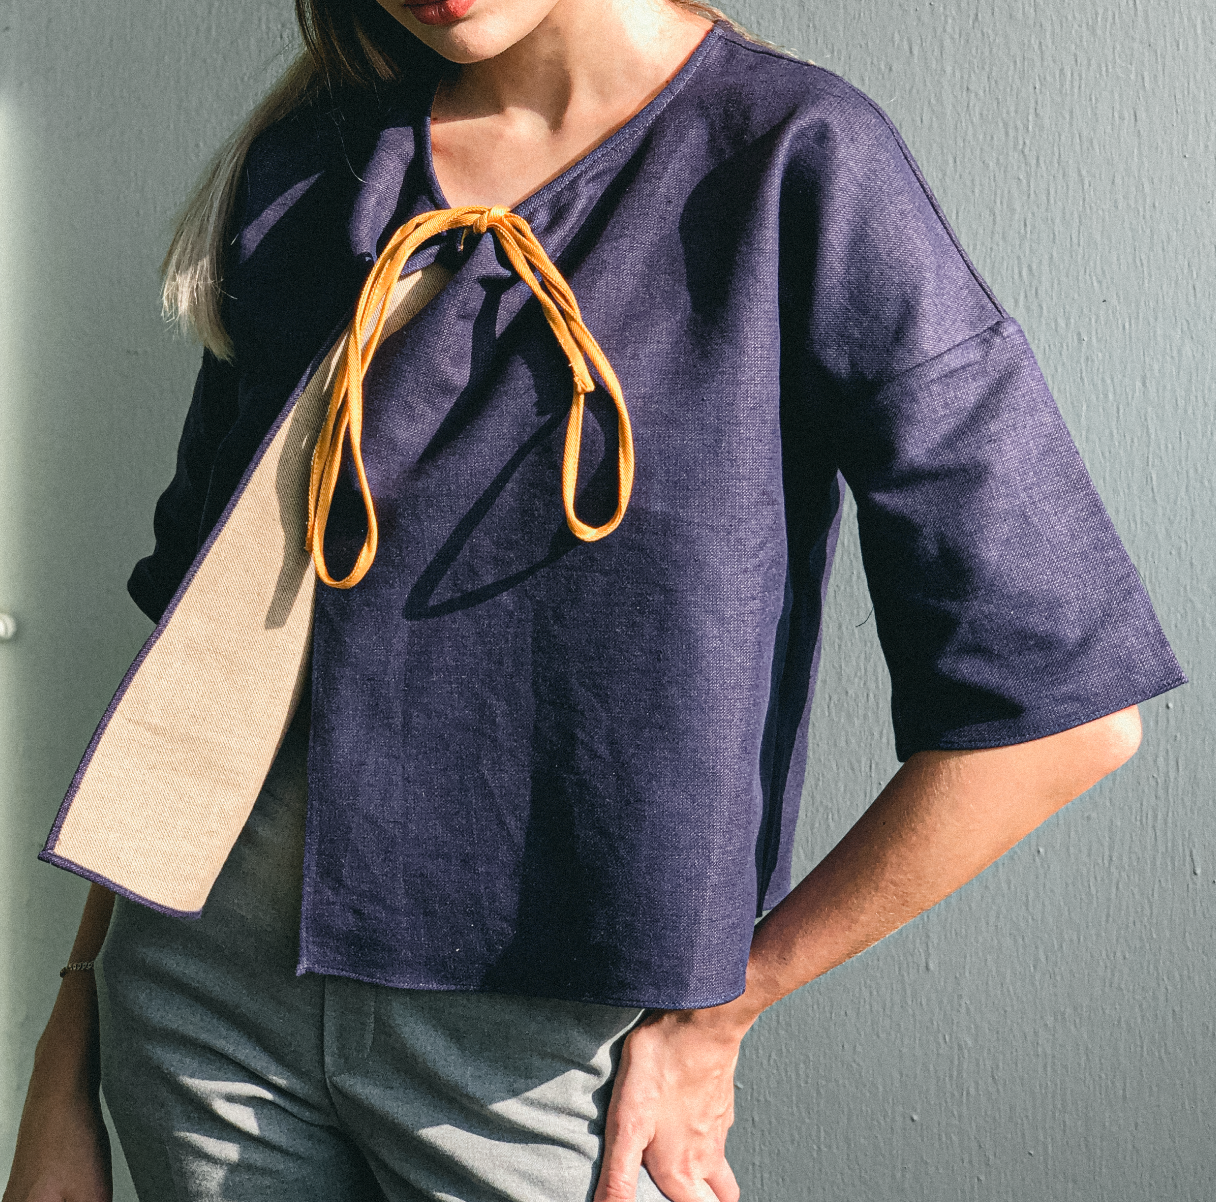 Kimono Denim Jacket by Ultramarine Studio